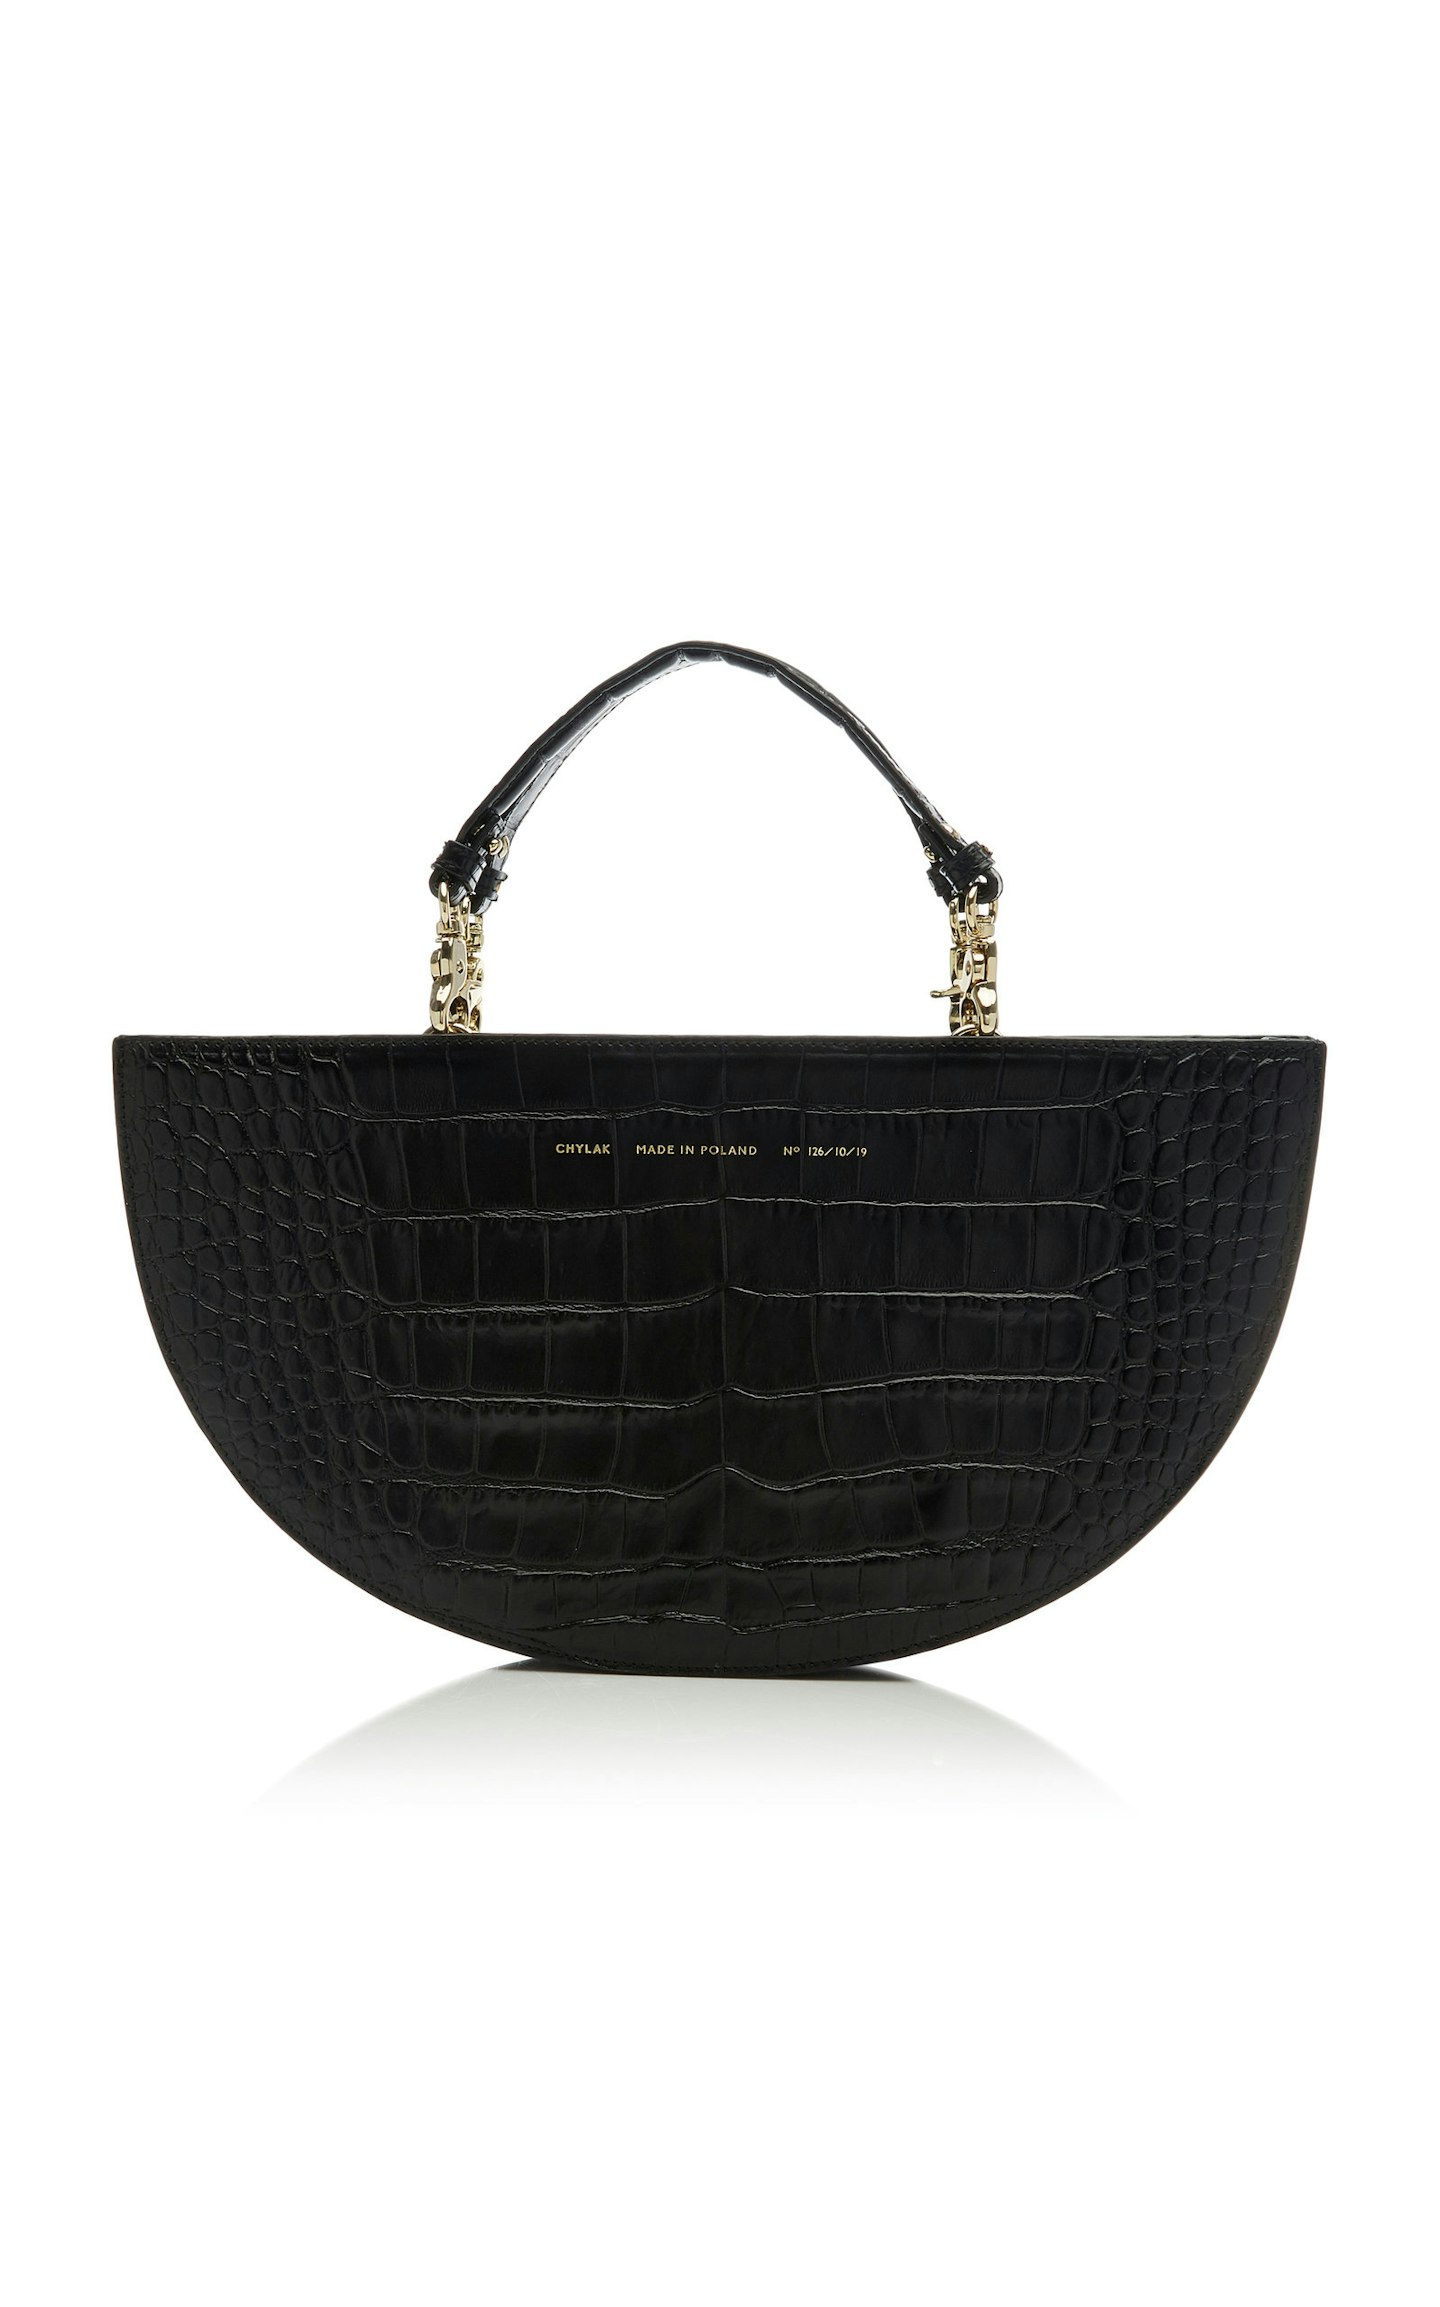 Chylak, Croc-Effect Leather Shoulder Bag, £378